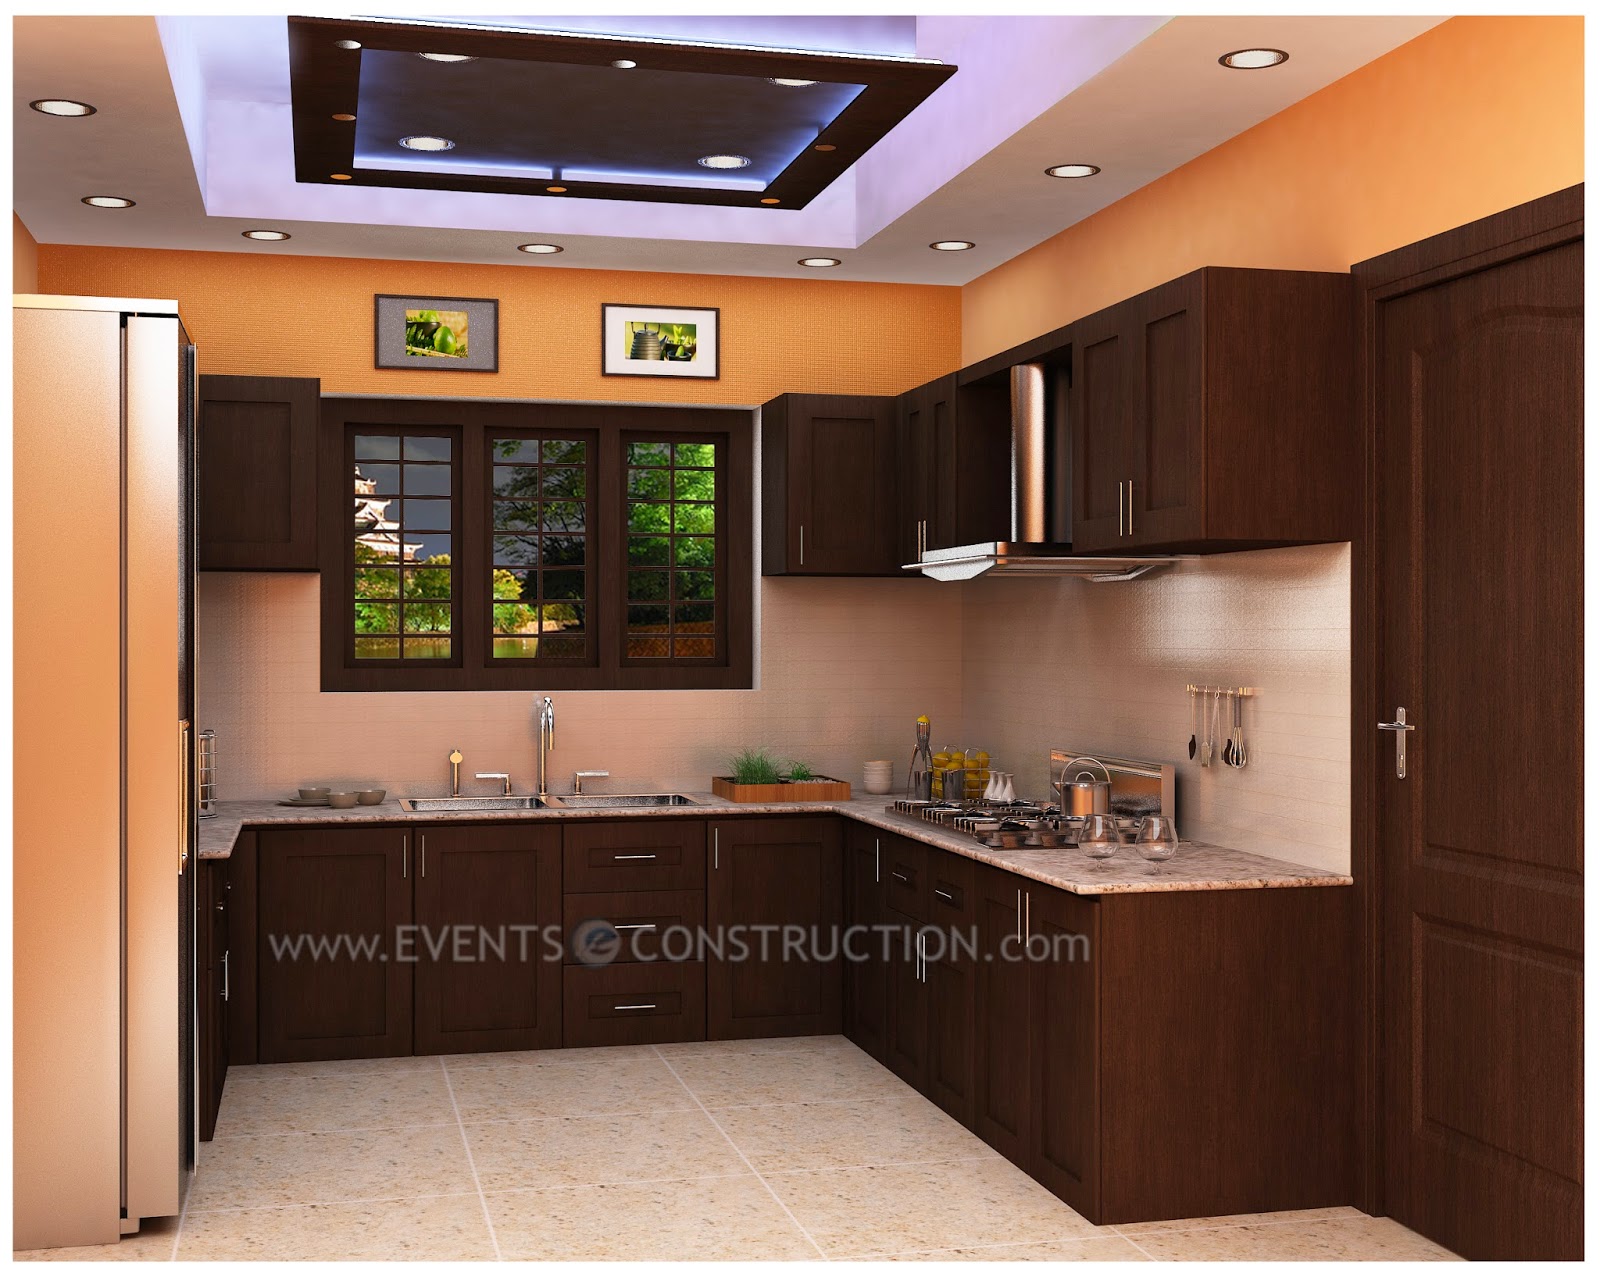 Evens Construction Pvt Ltd: Kitchen interior design